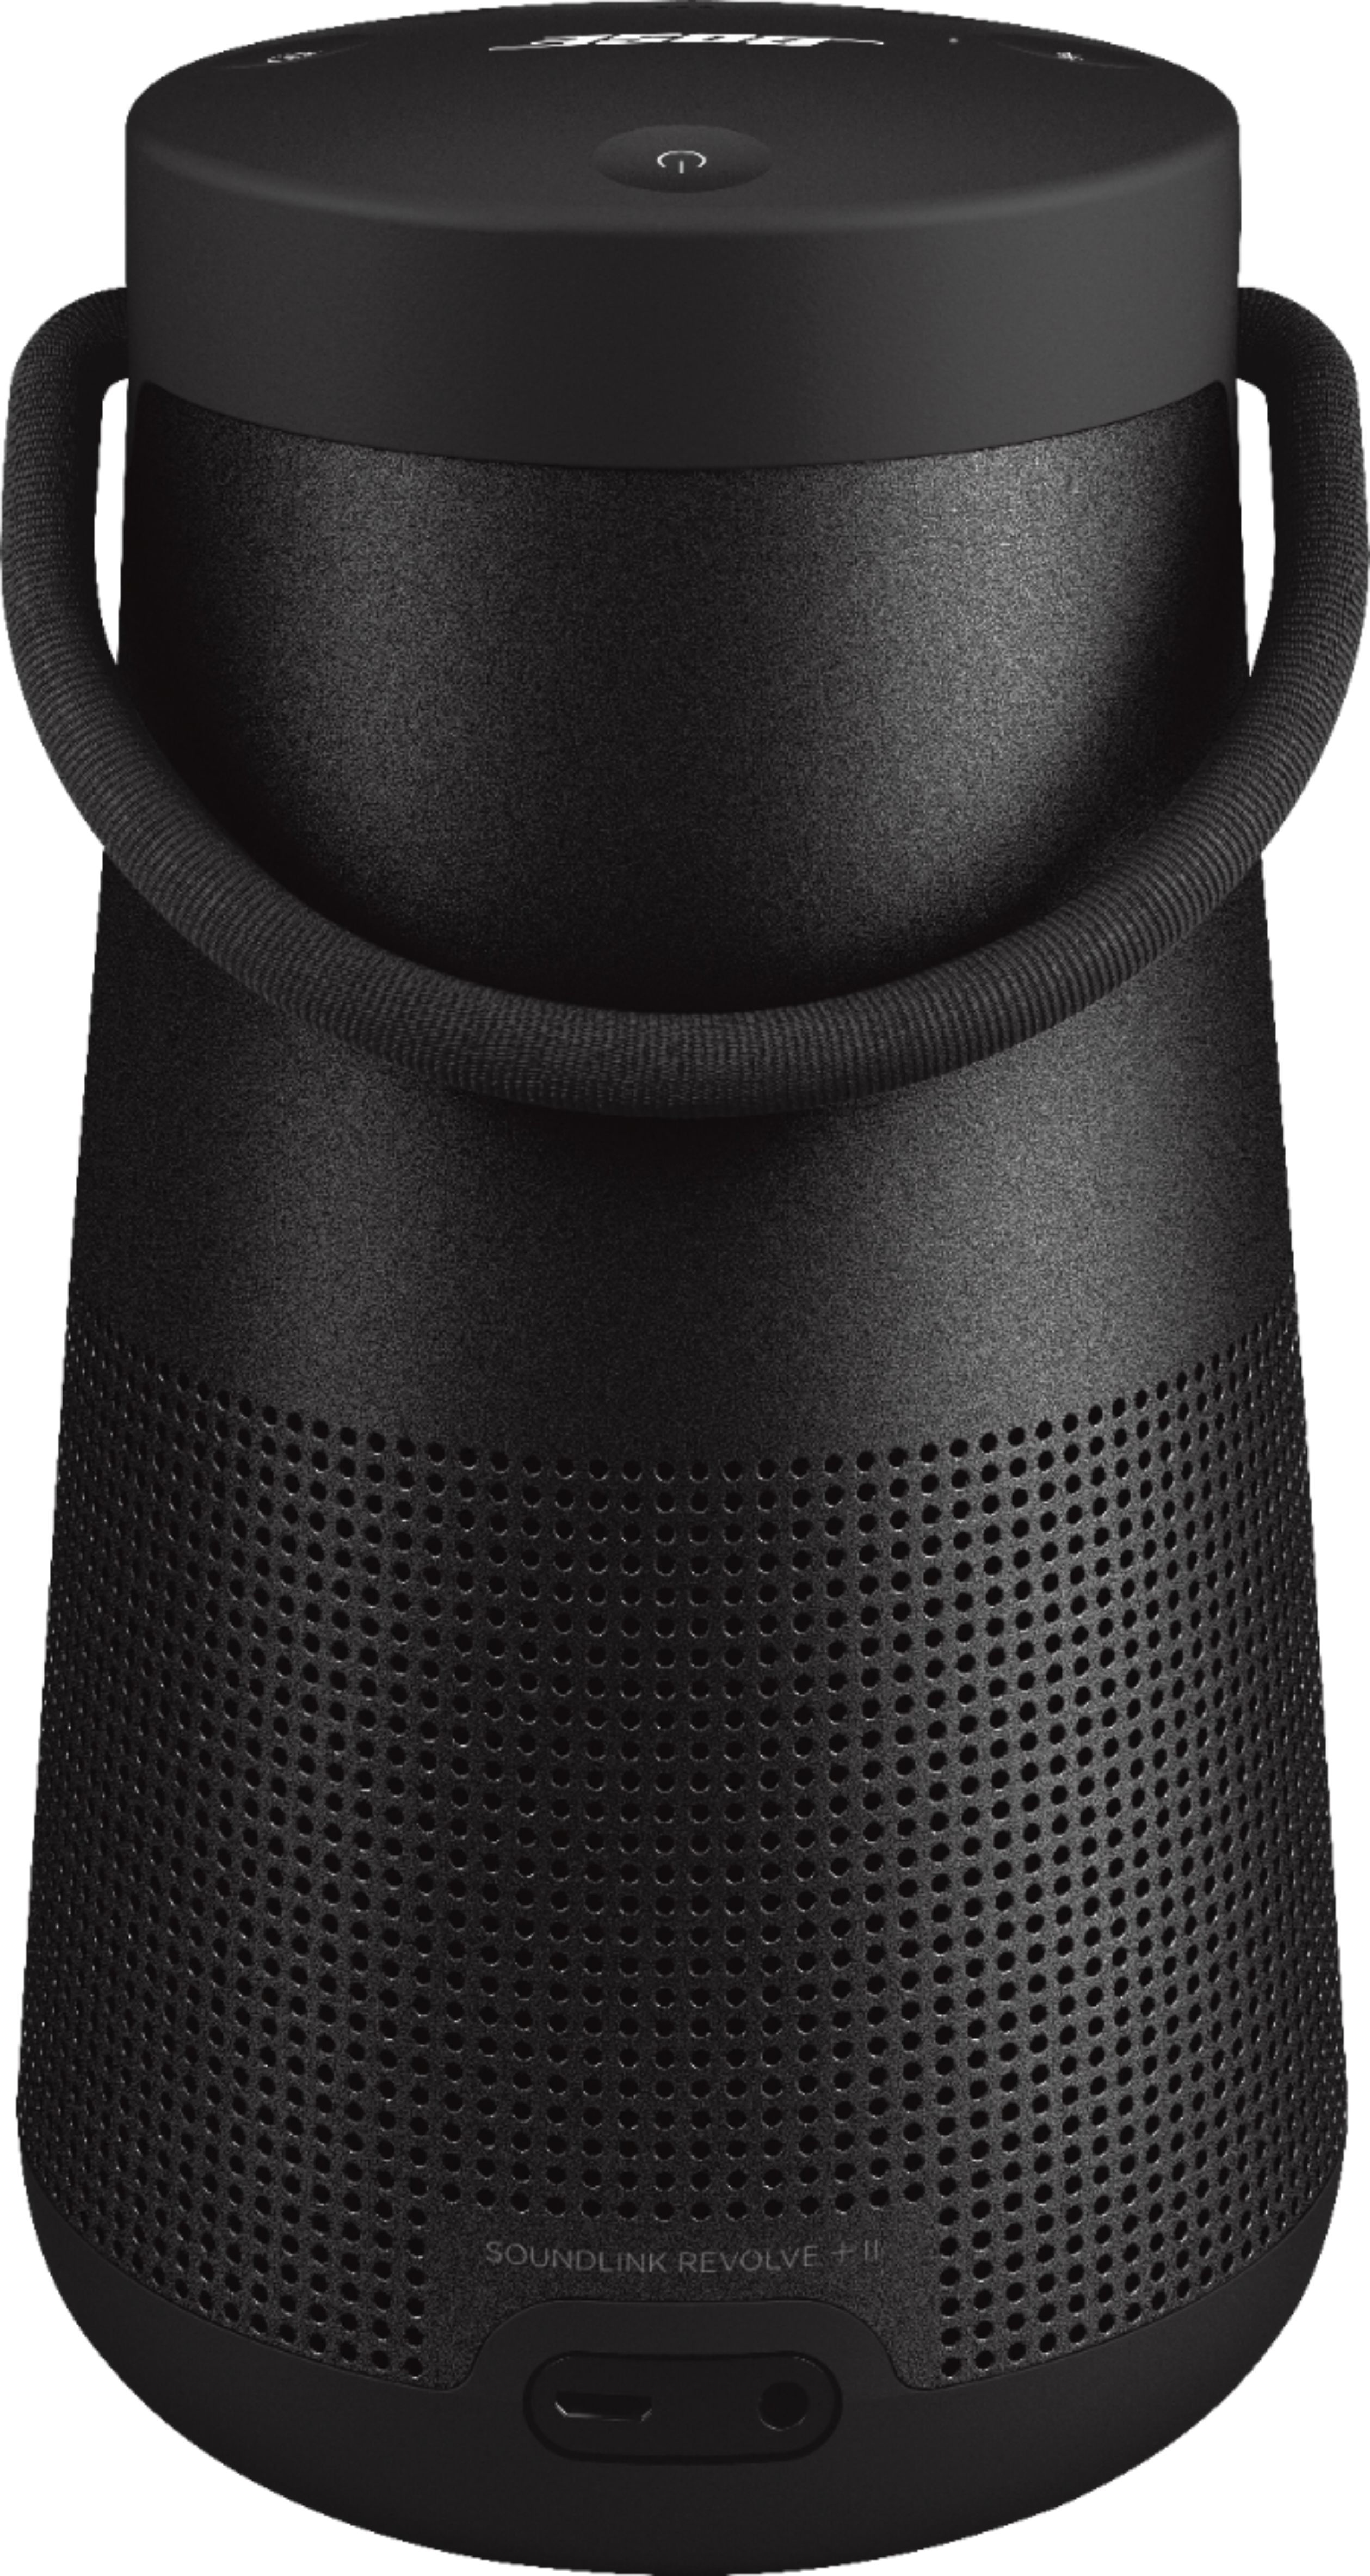 Bose SoundLink Revolve+ II Portable Bluetooth Speaker Triple Black  858366-1110 - Best Buy